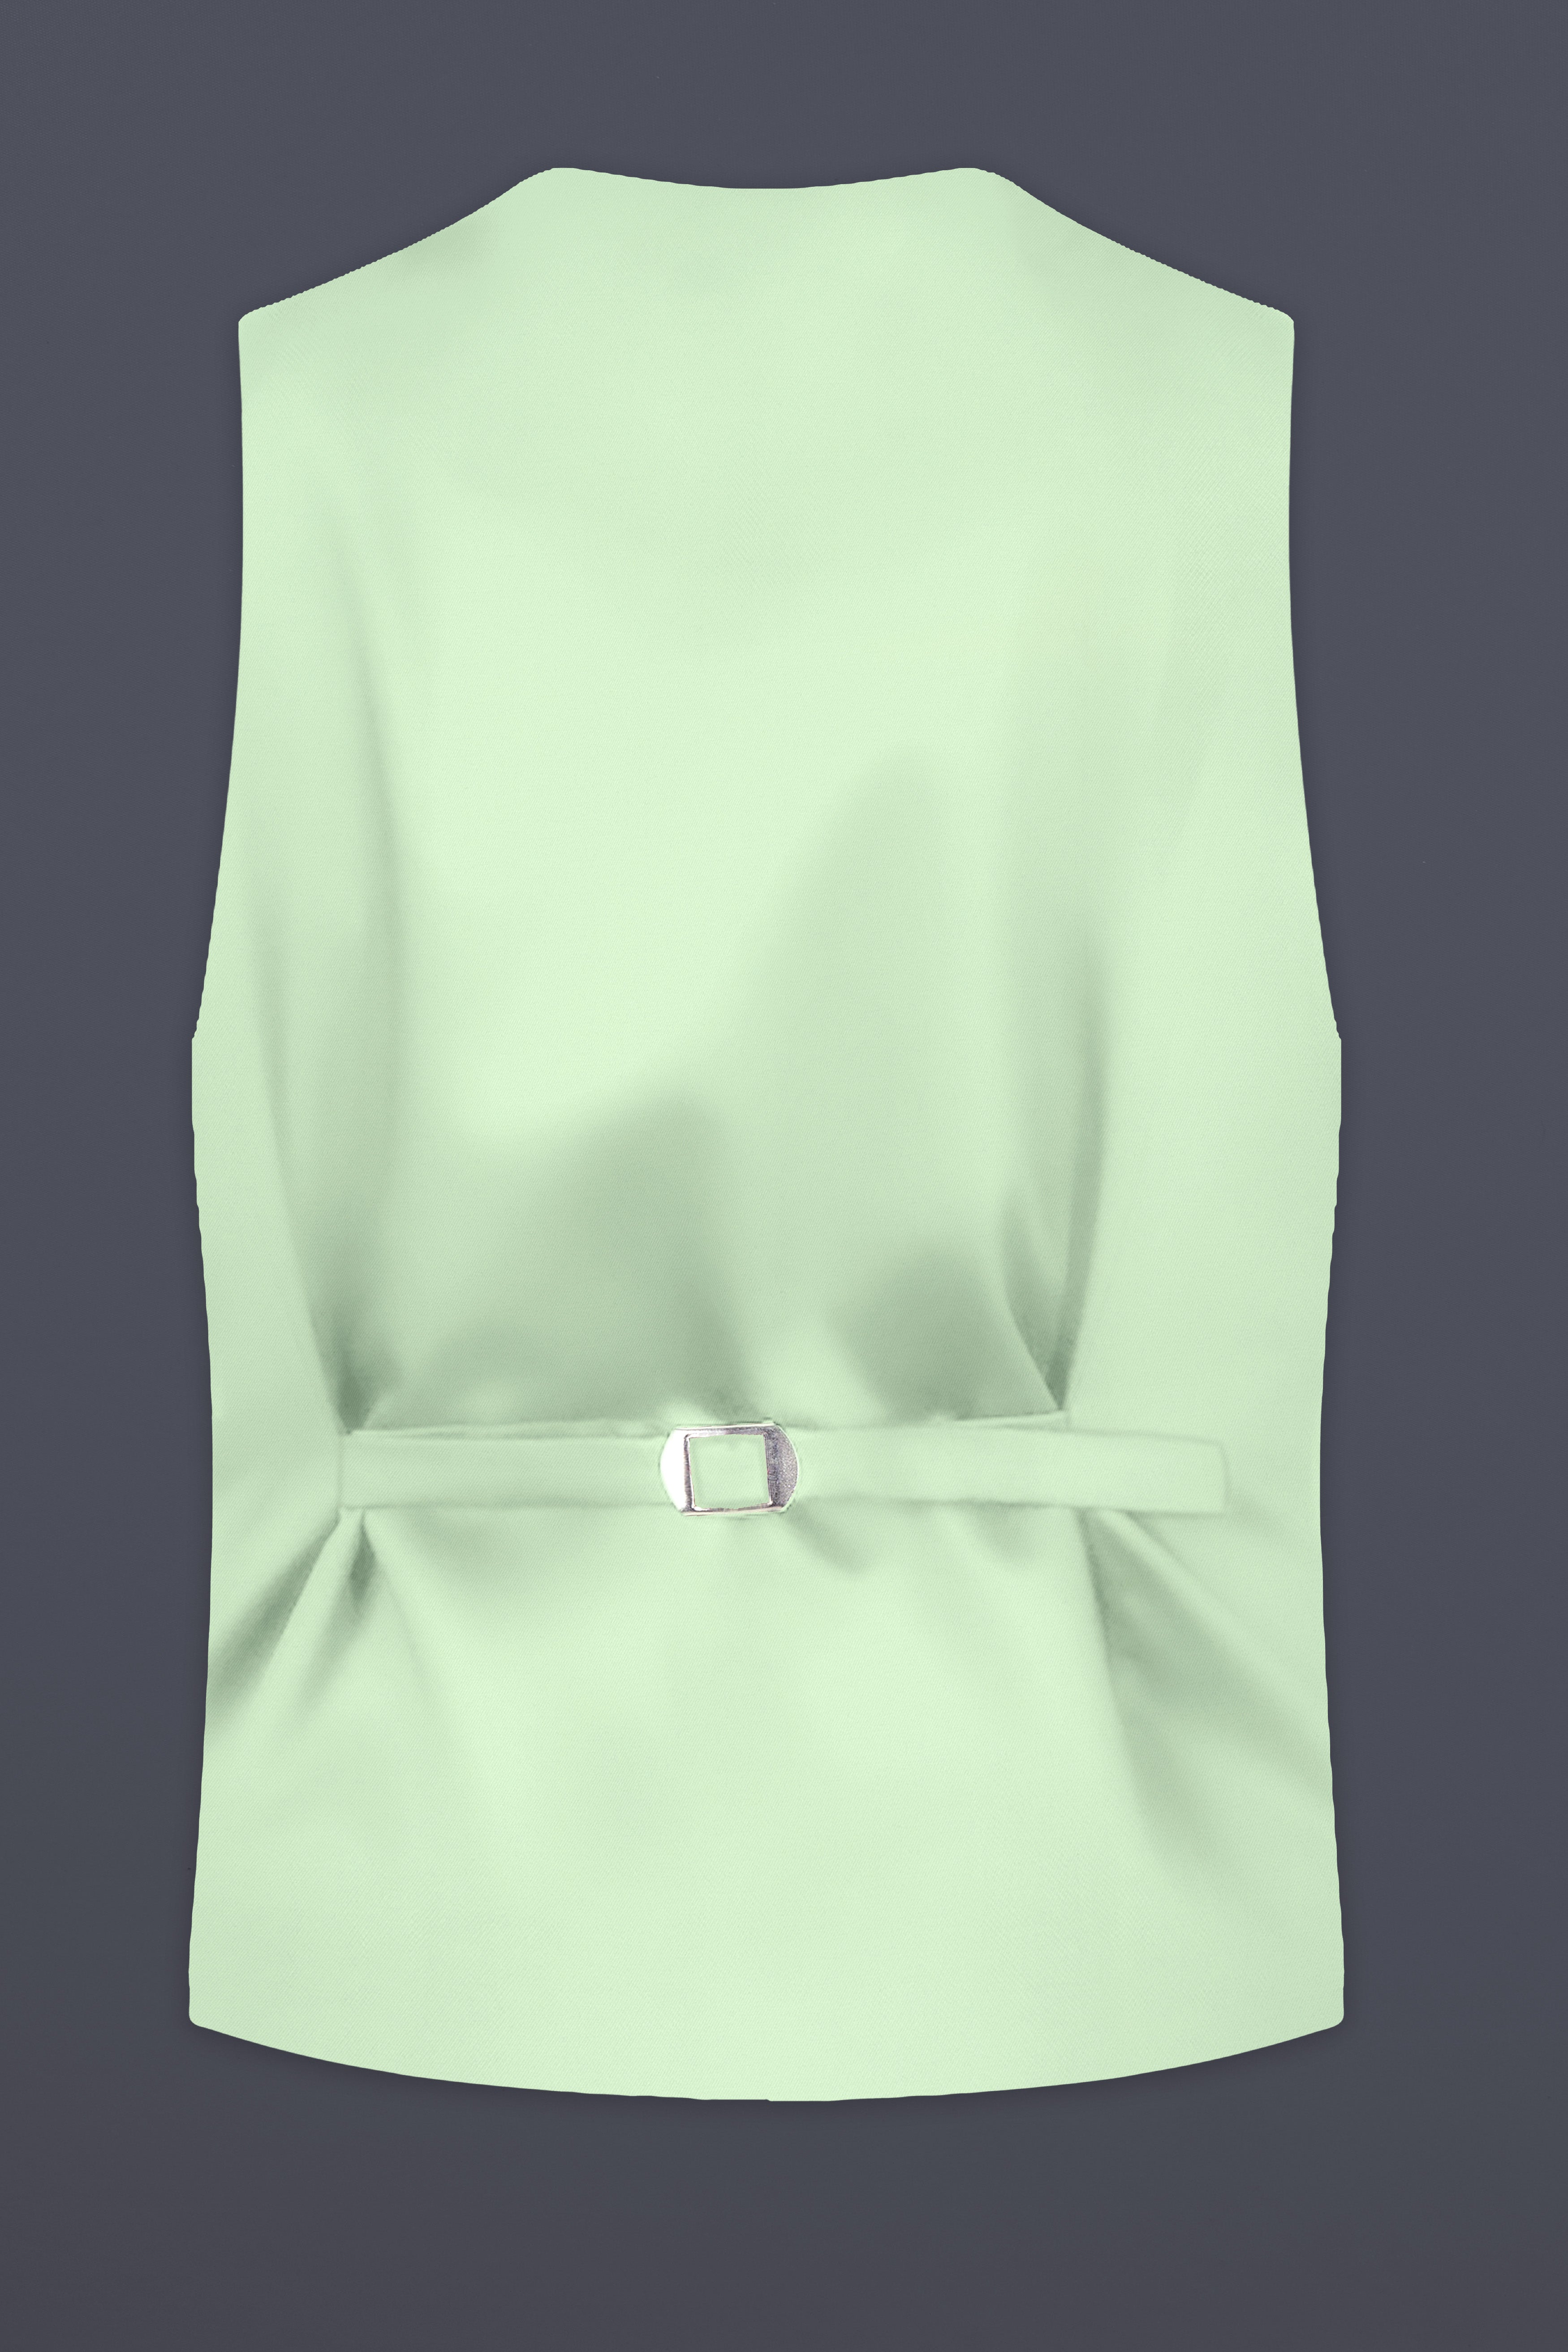 Pixie Green Solid Waistcoat